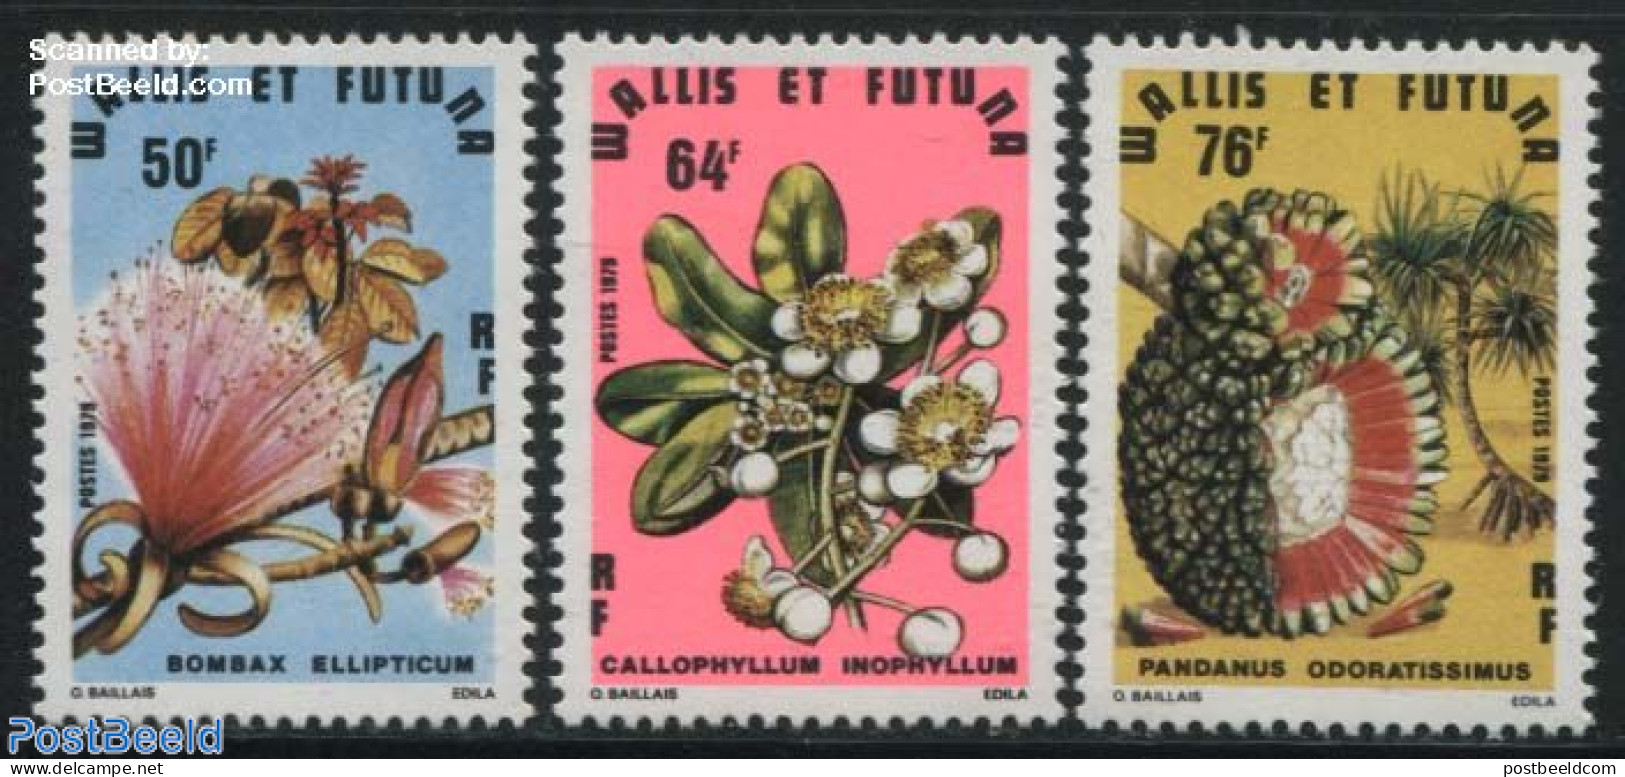 Wallis & Futuna 1979 Fruit And Flowers 3v, Mint NH, Nature - Flowers & Plants - Fruit - Obst & Früchte